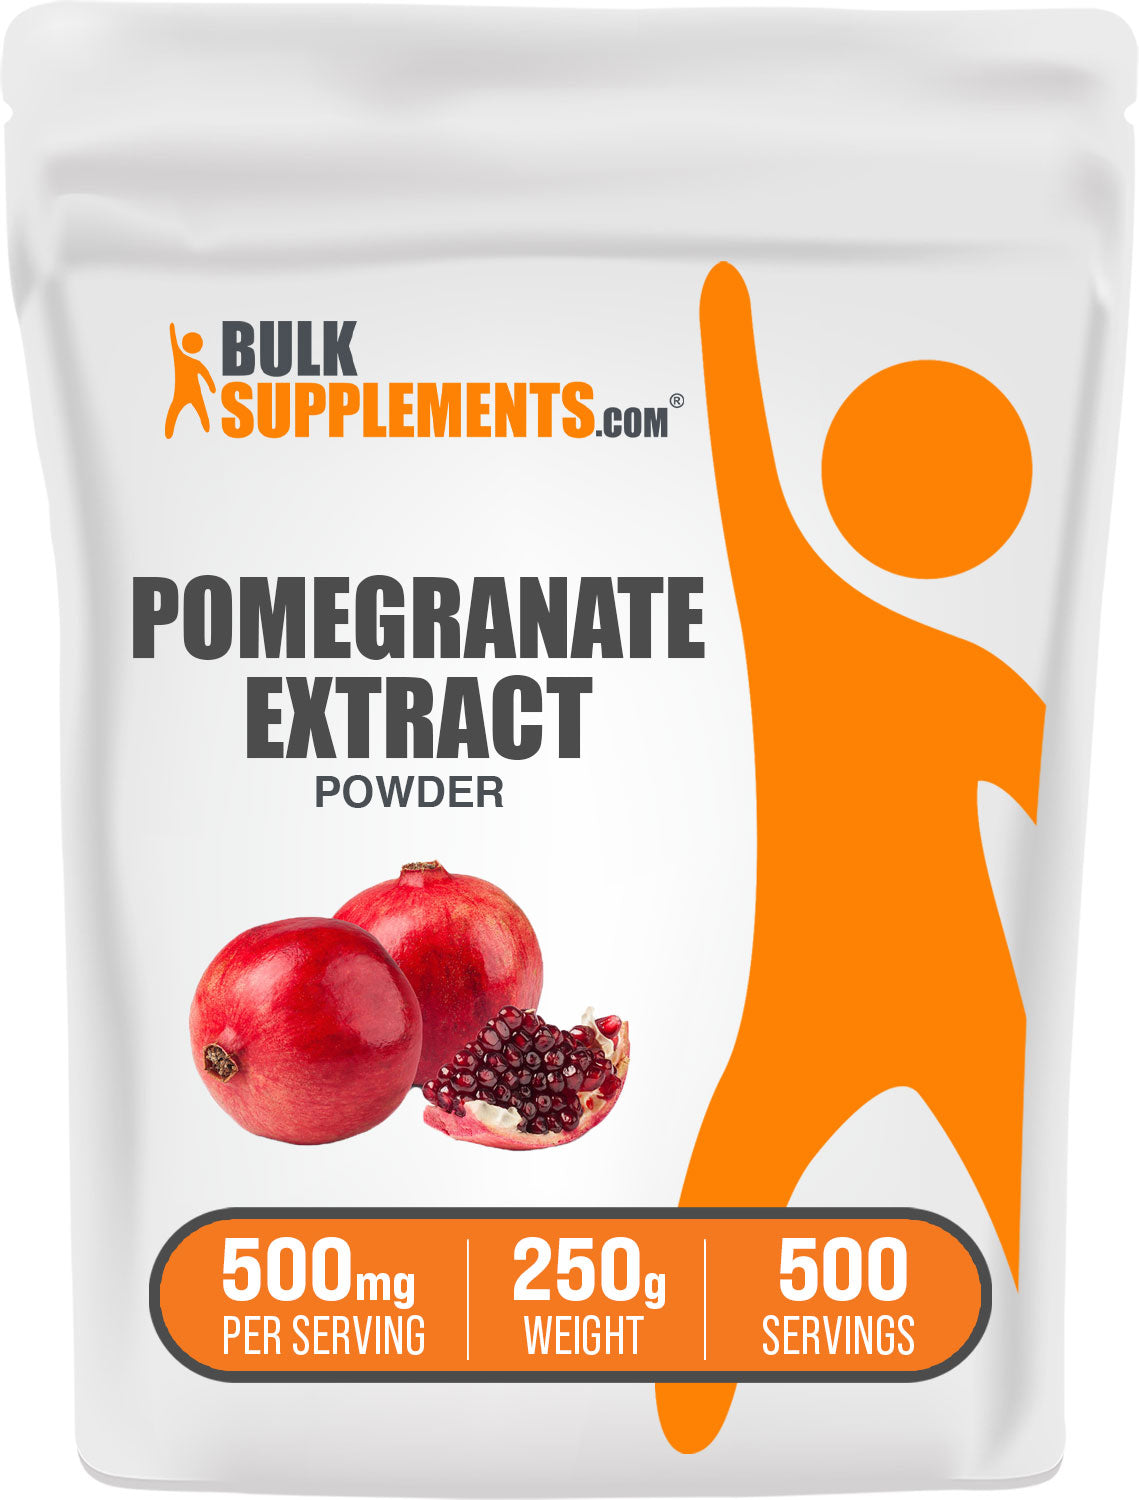 Pomegranate antioxidant supplements